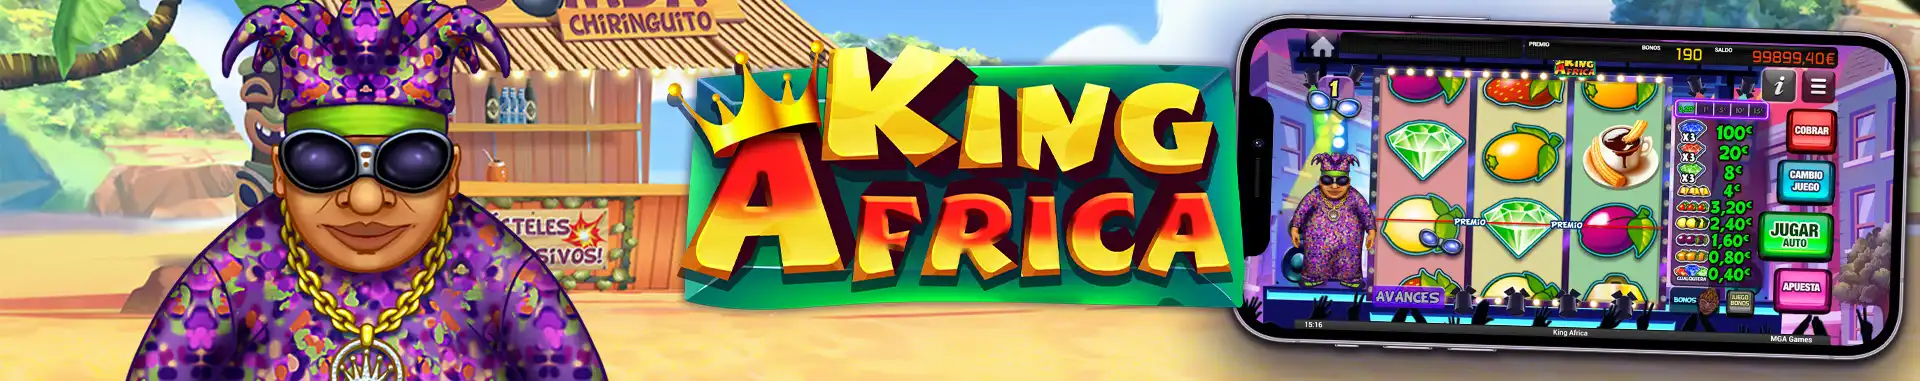 Tragaperras online King África